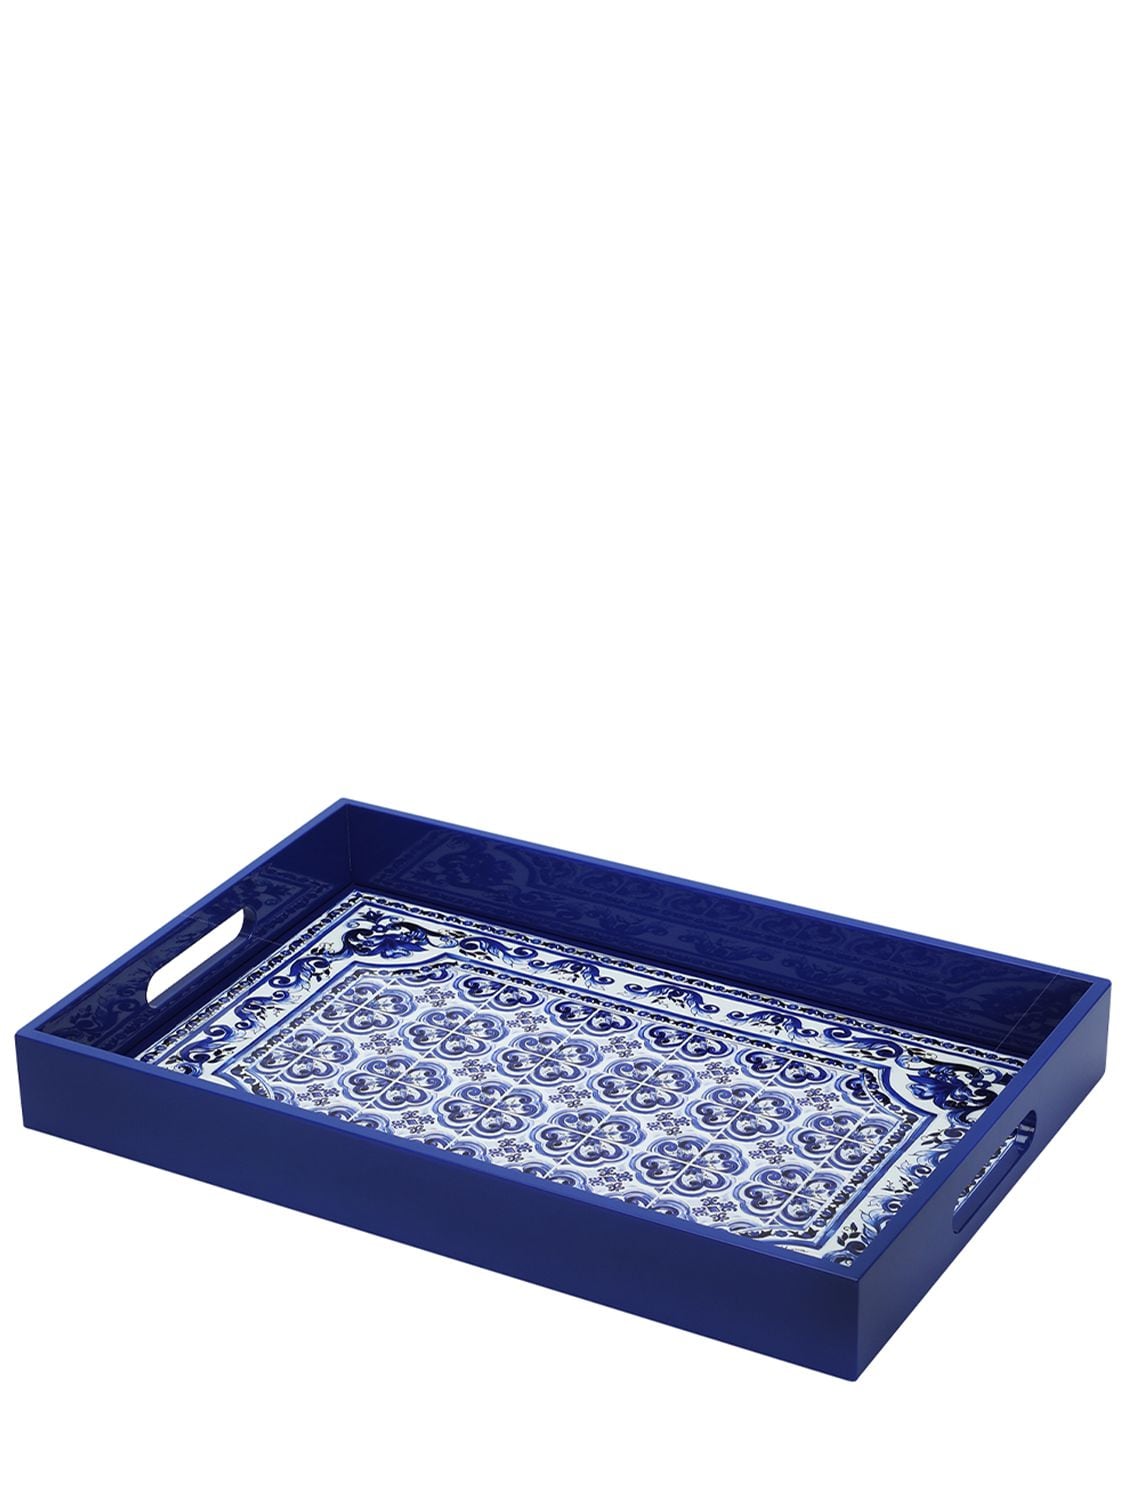 Dolce & Gabbana Mediterranean Blue Rectangular Tray